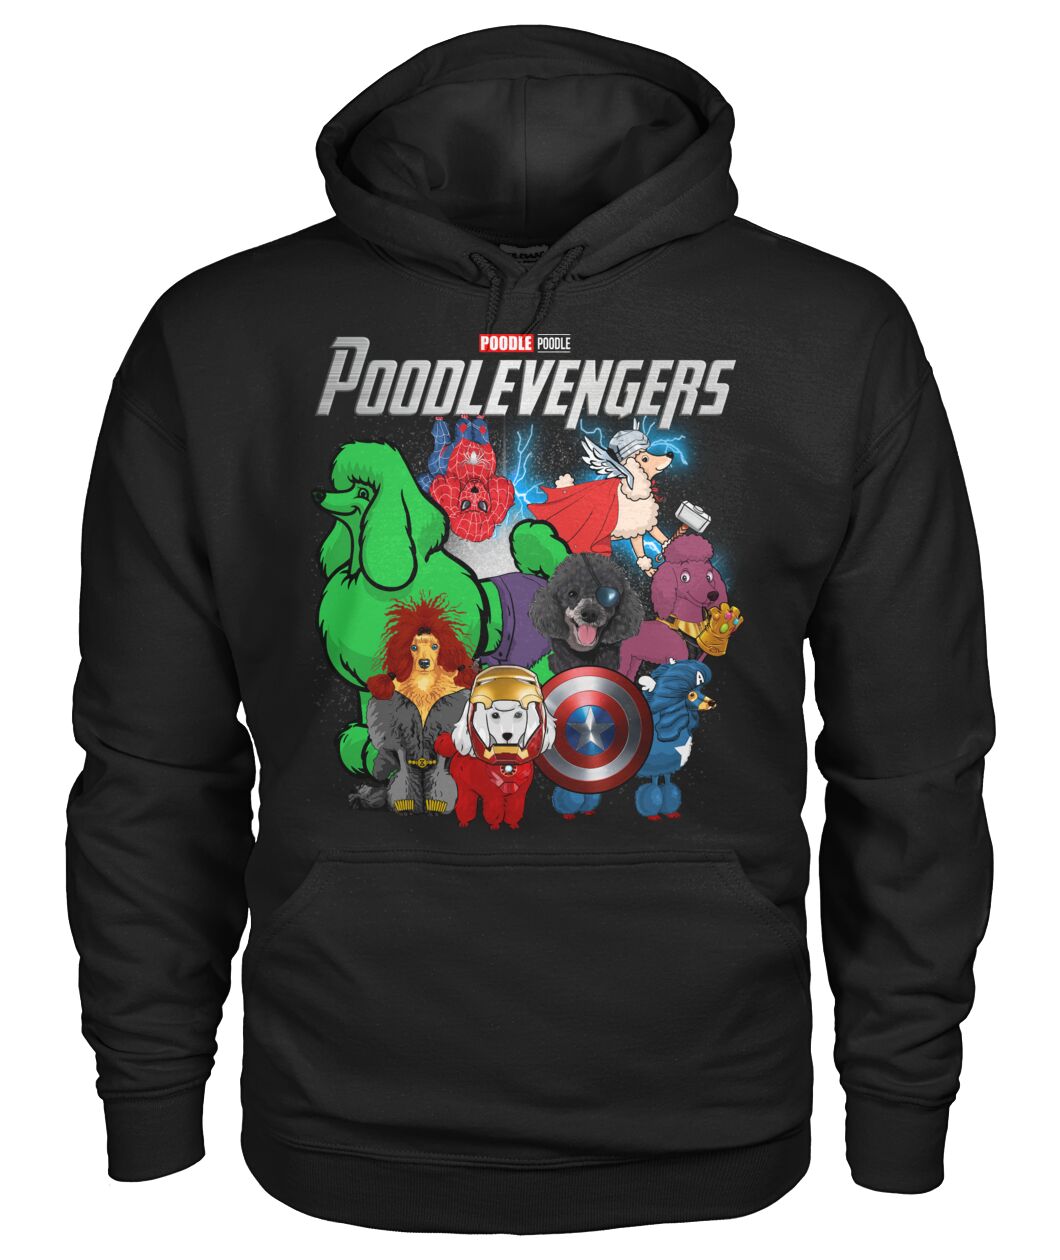 Poodlevengers 3D Hoodie, Shirt 8